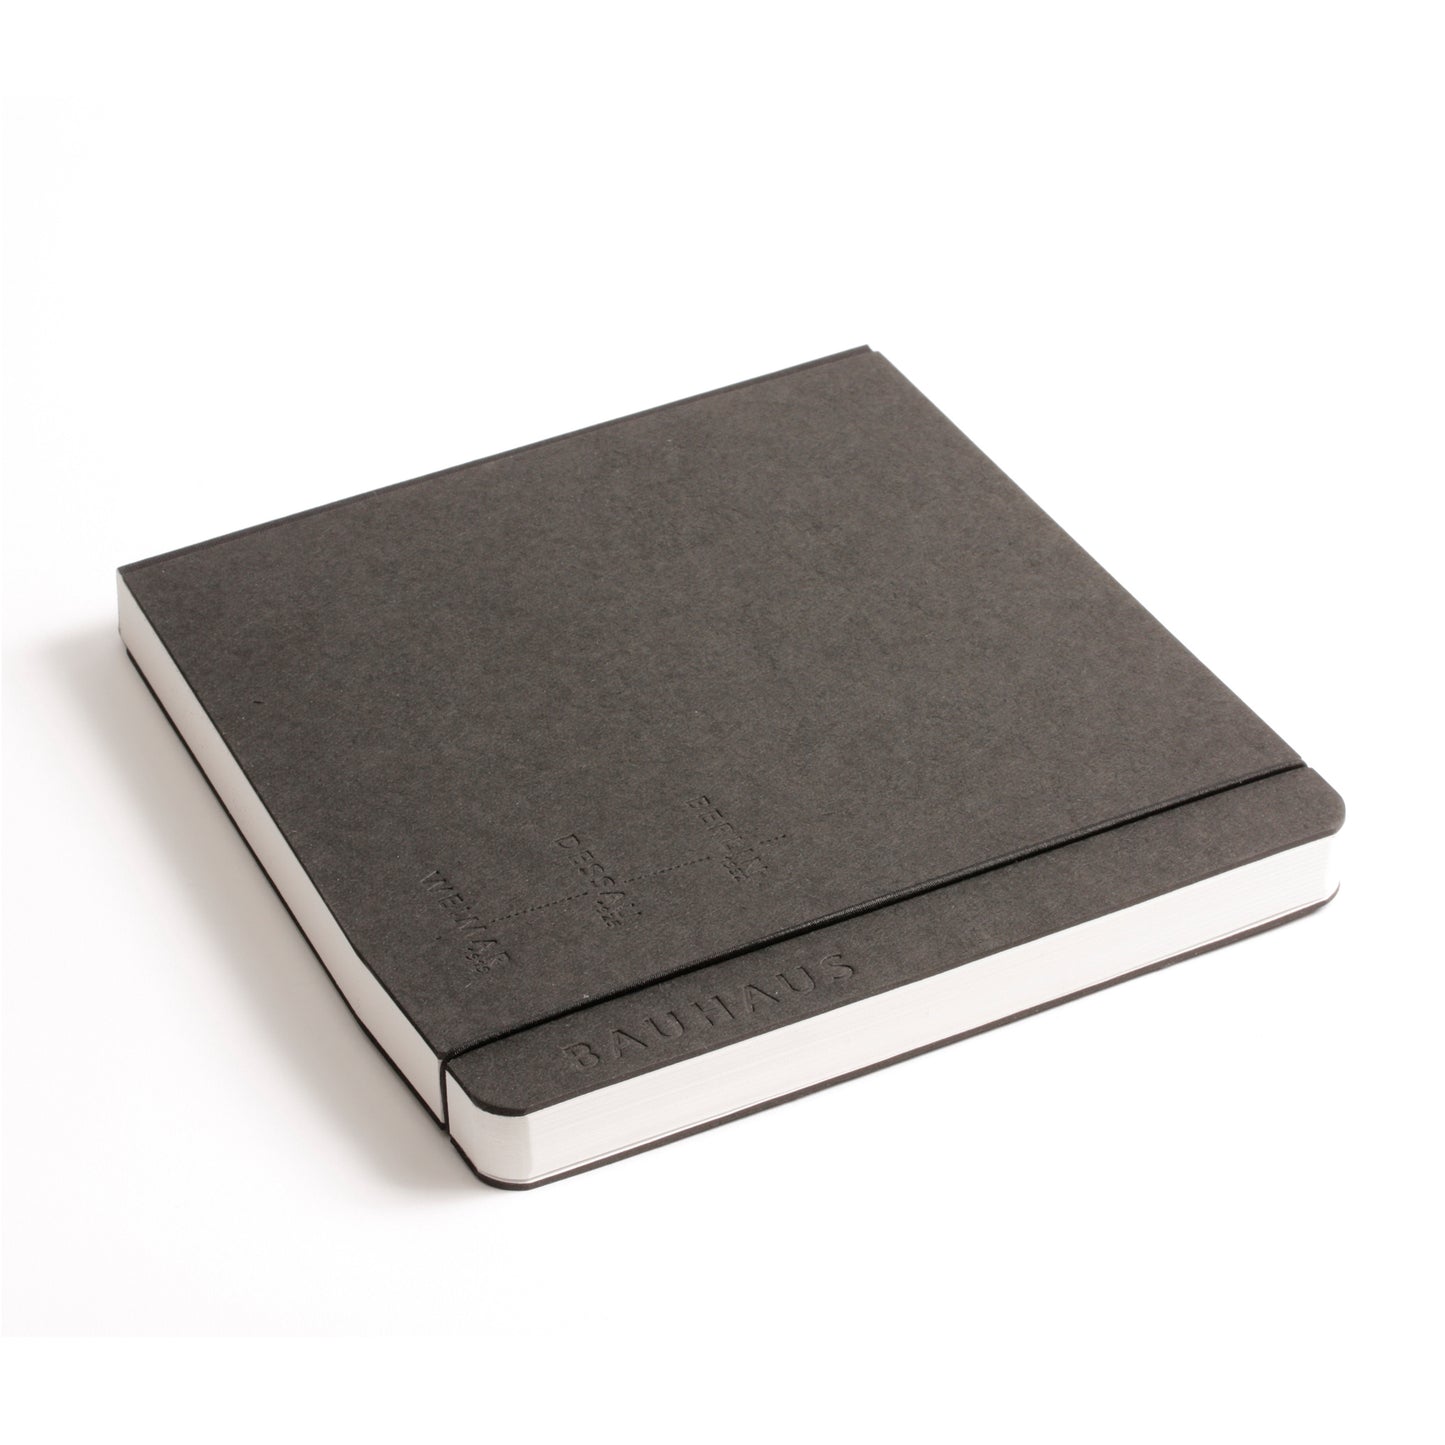 Sketchbook Bindewerk Bauhaus, 96 blank sheet of 120 g